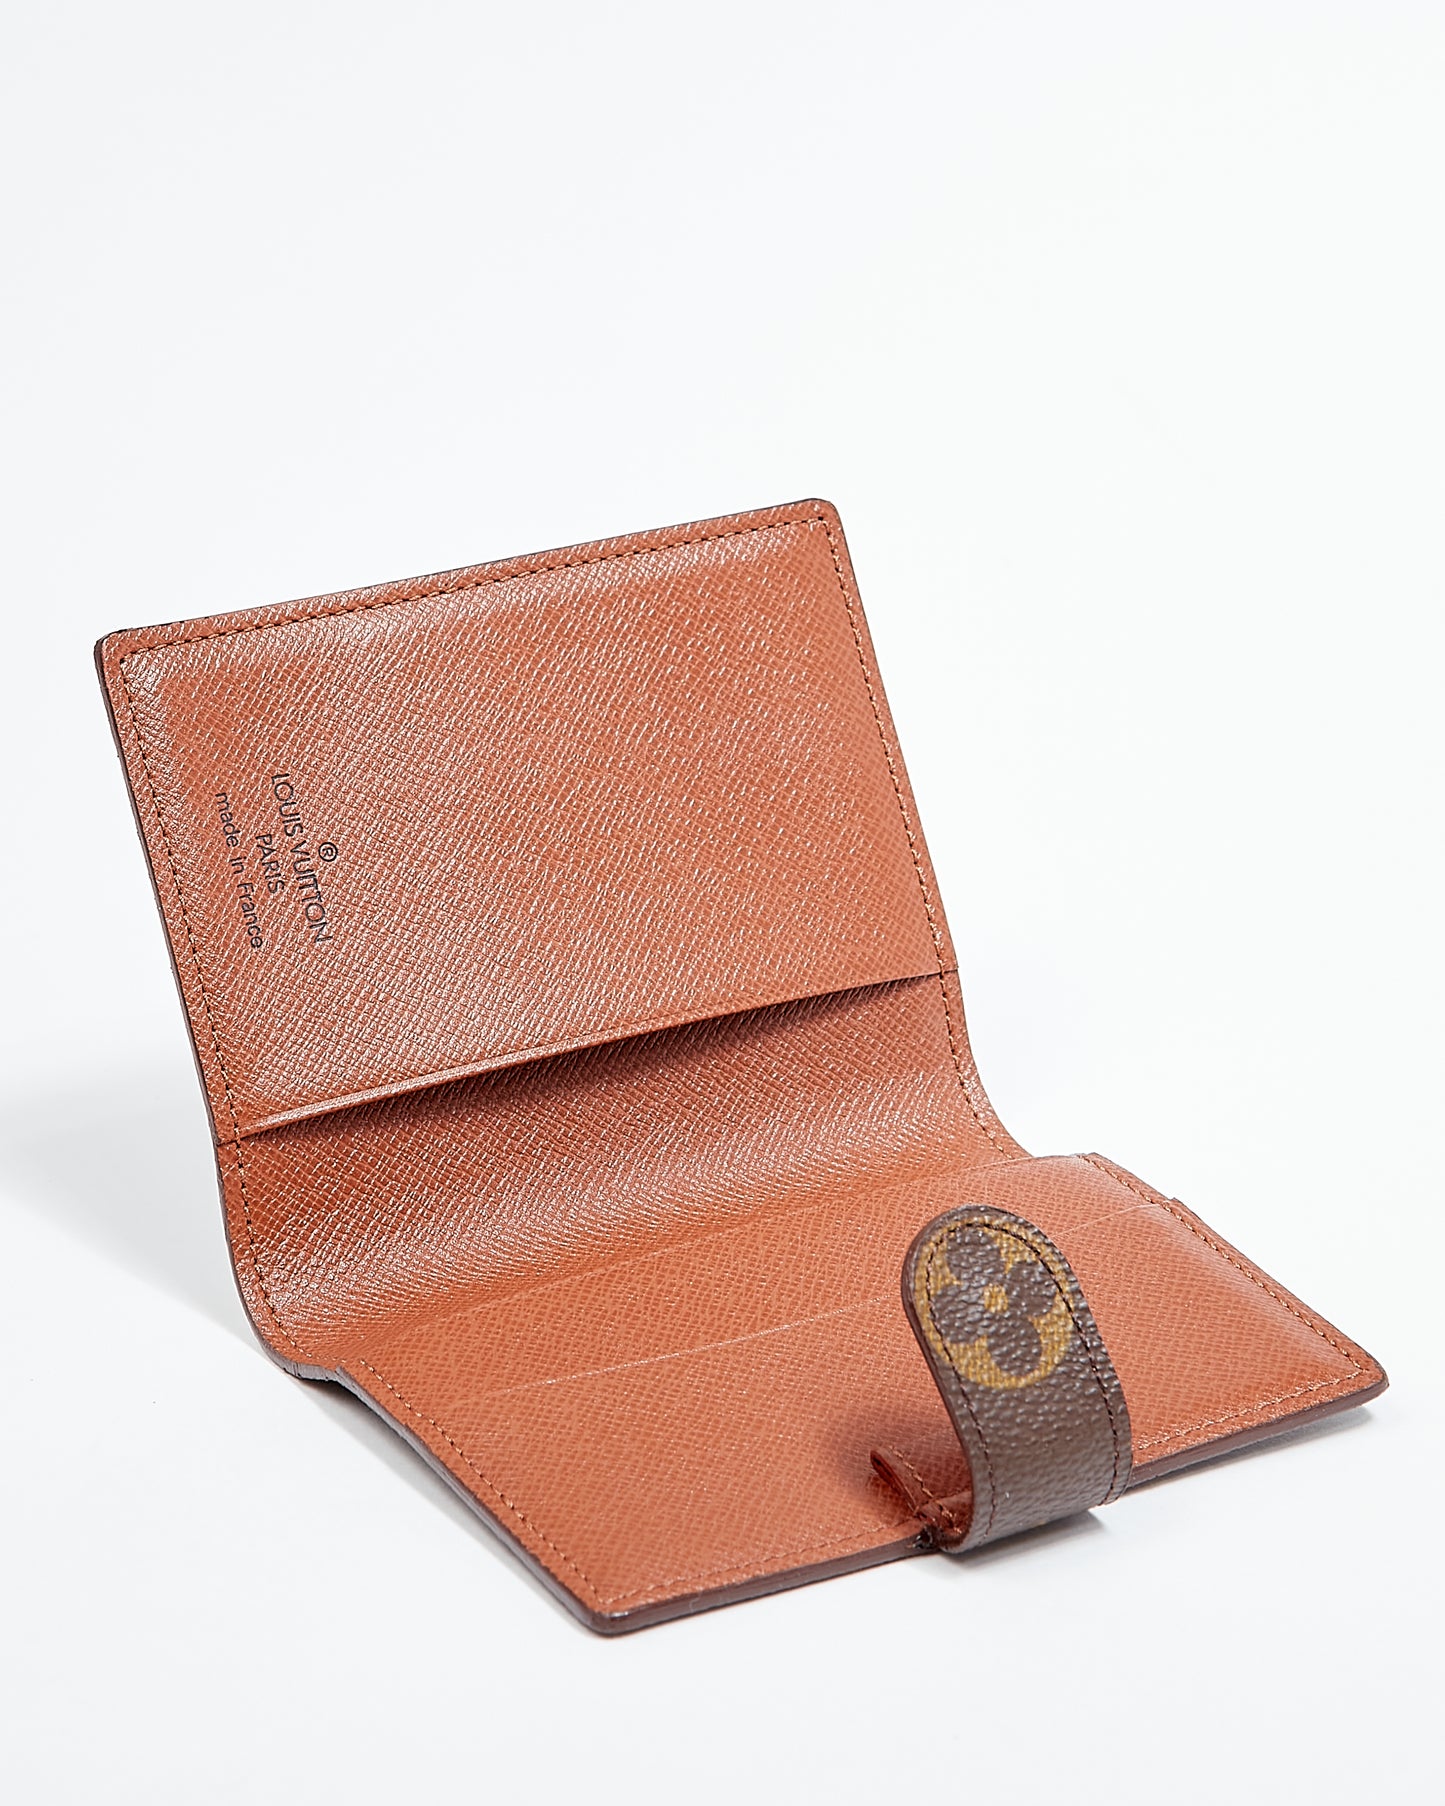 Louis Vuitton Monogram Canvas Small Compact Card Wallet